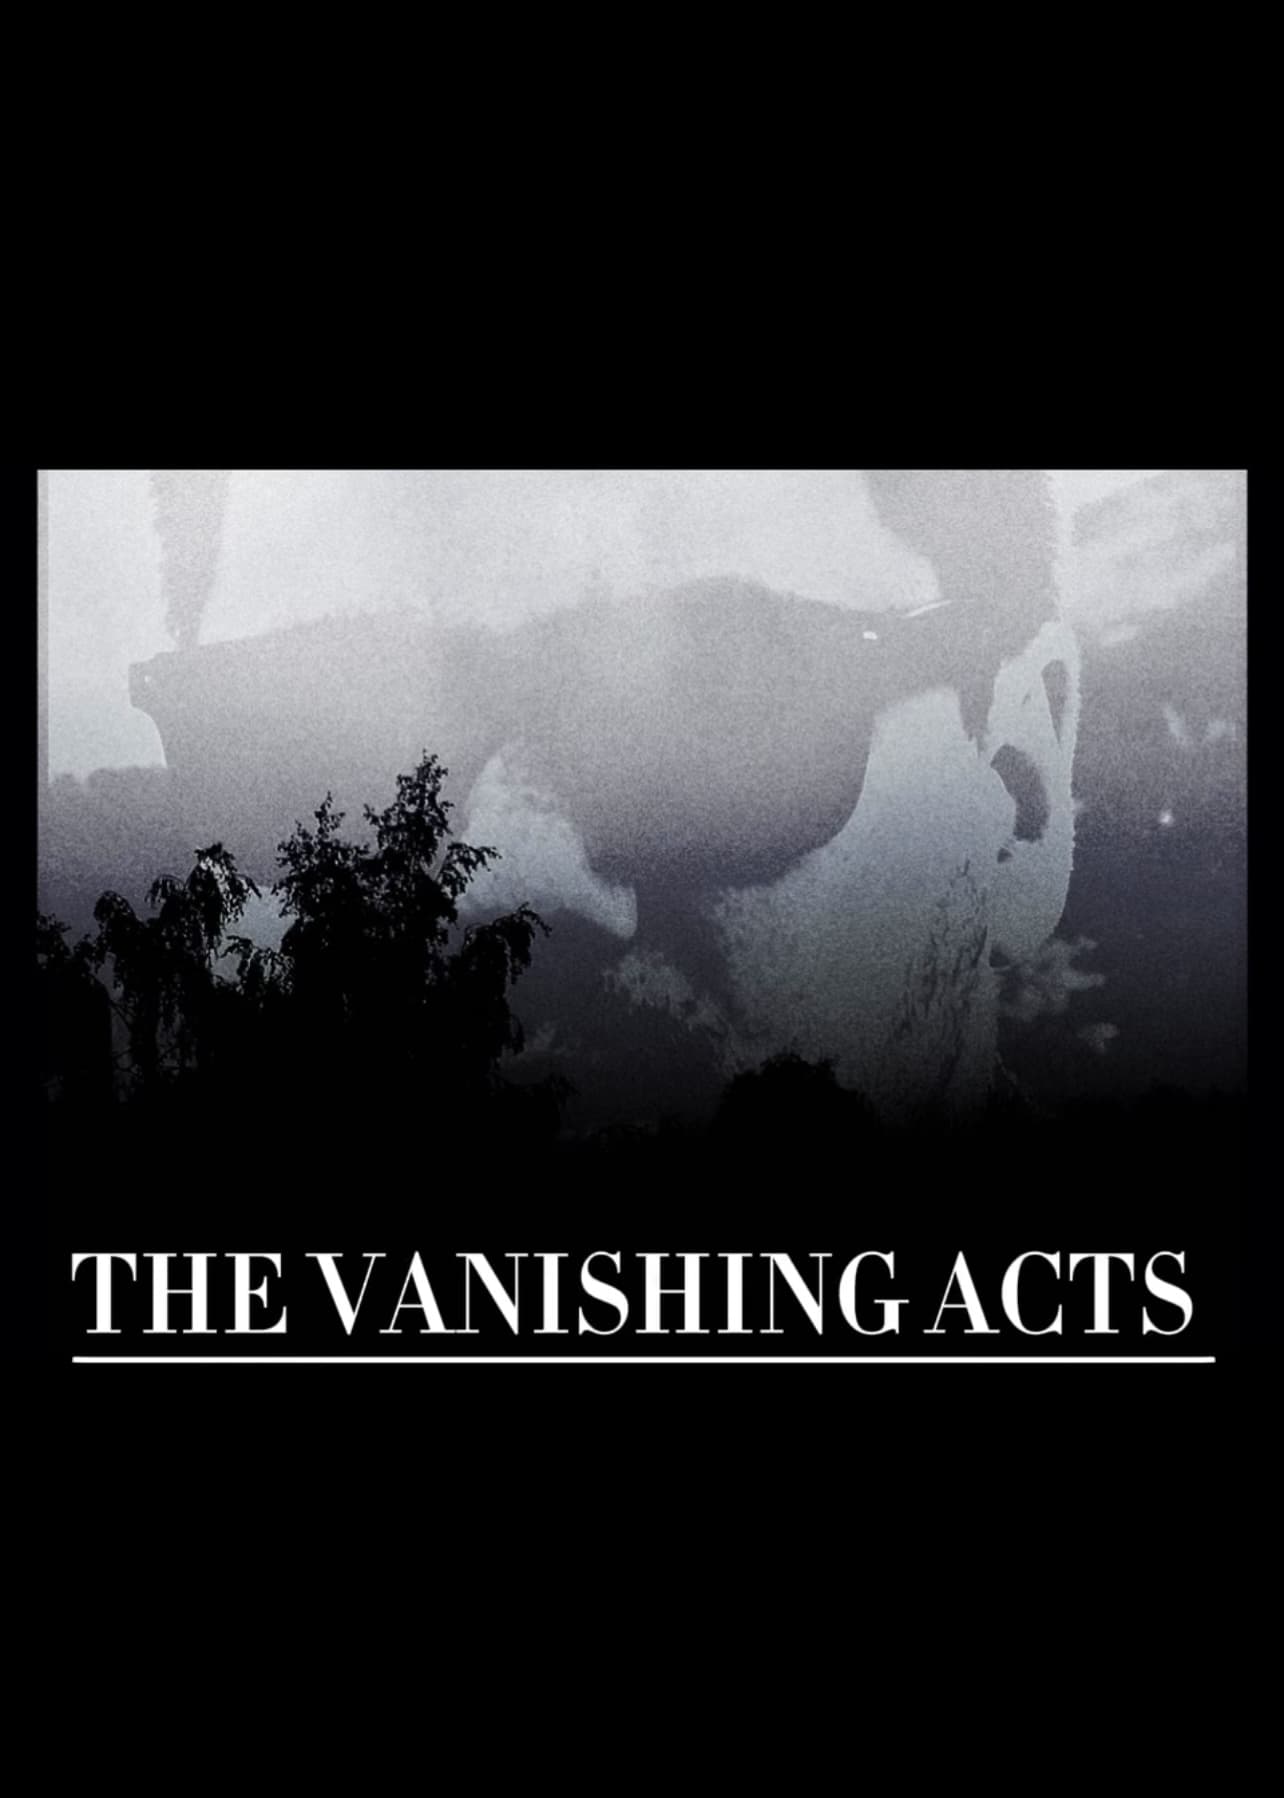 THE VANISHING ACTS